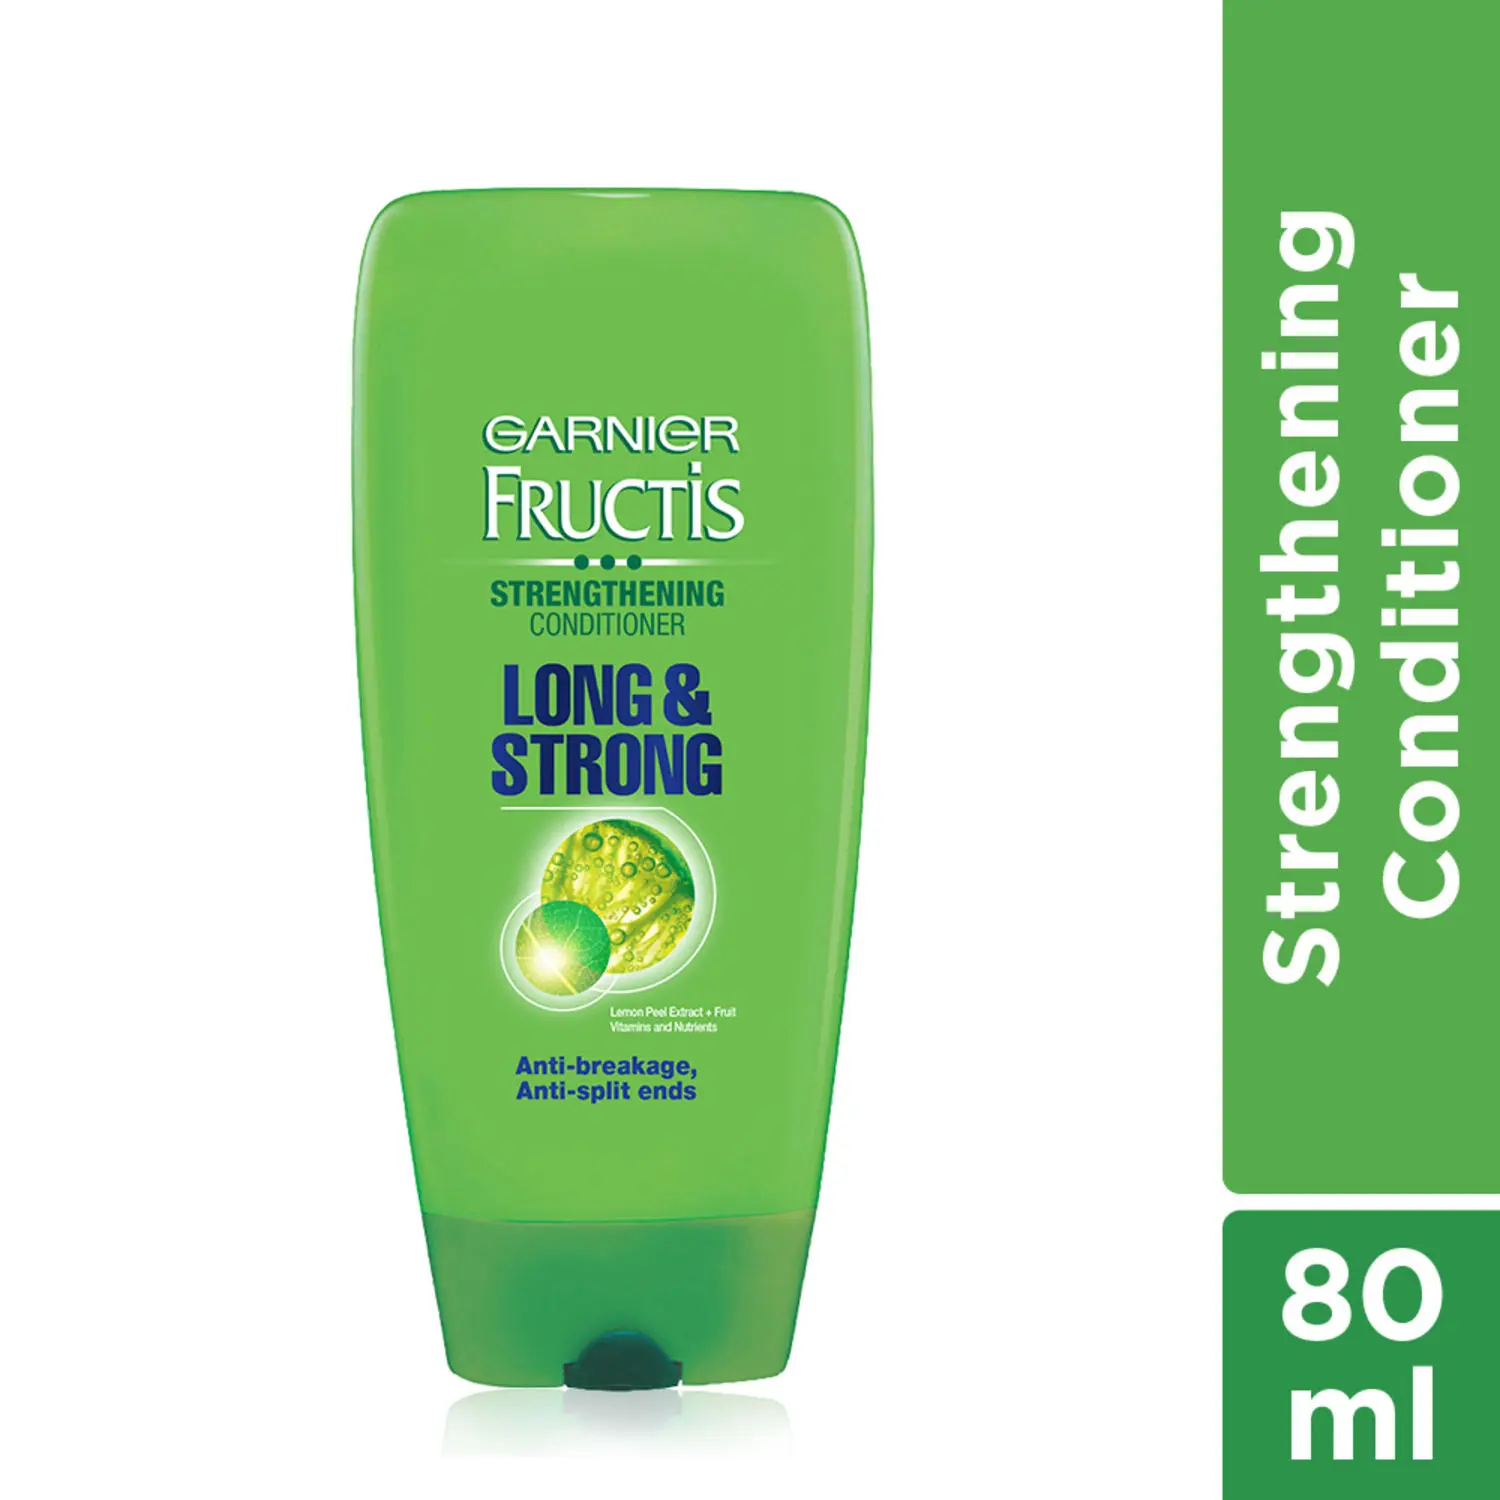 Garnier Fructis Long & Strong Strengthening conditioner, (80 ml)